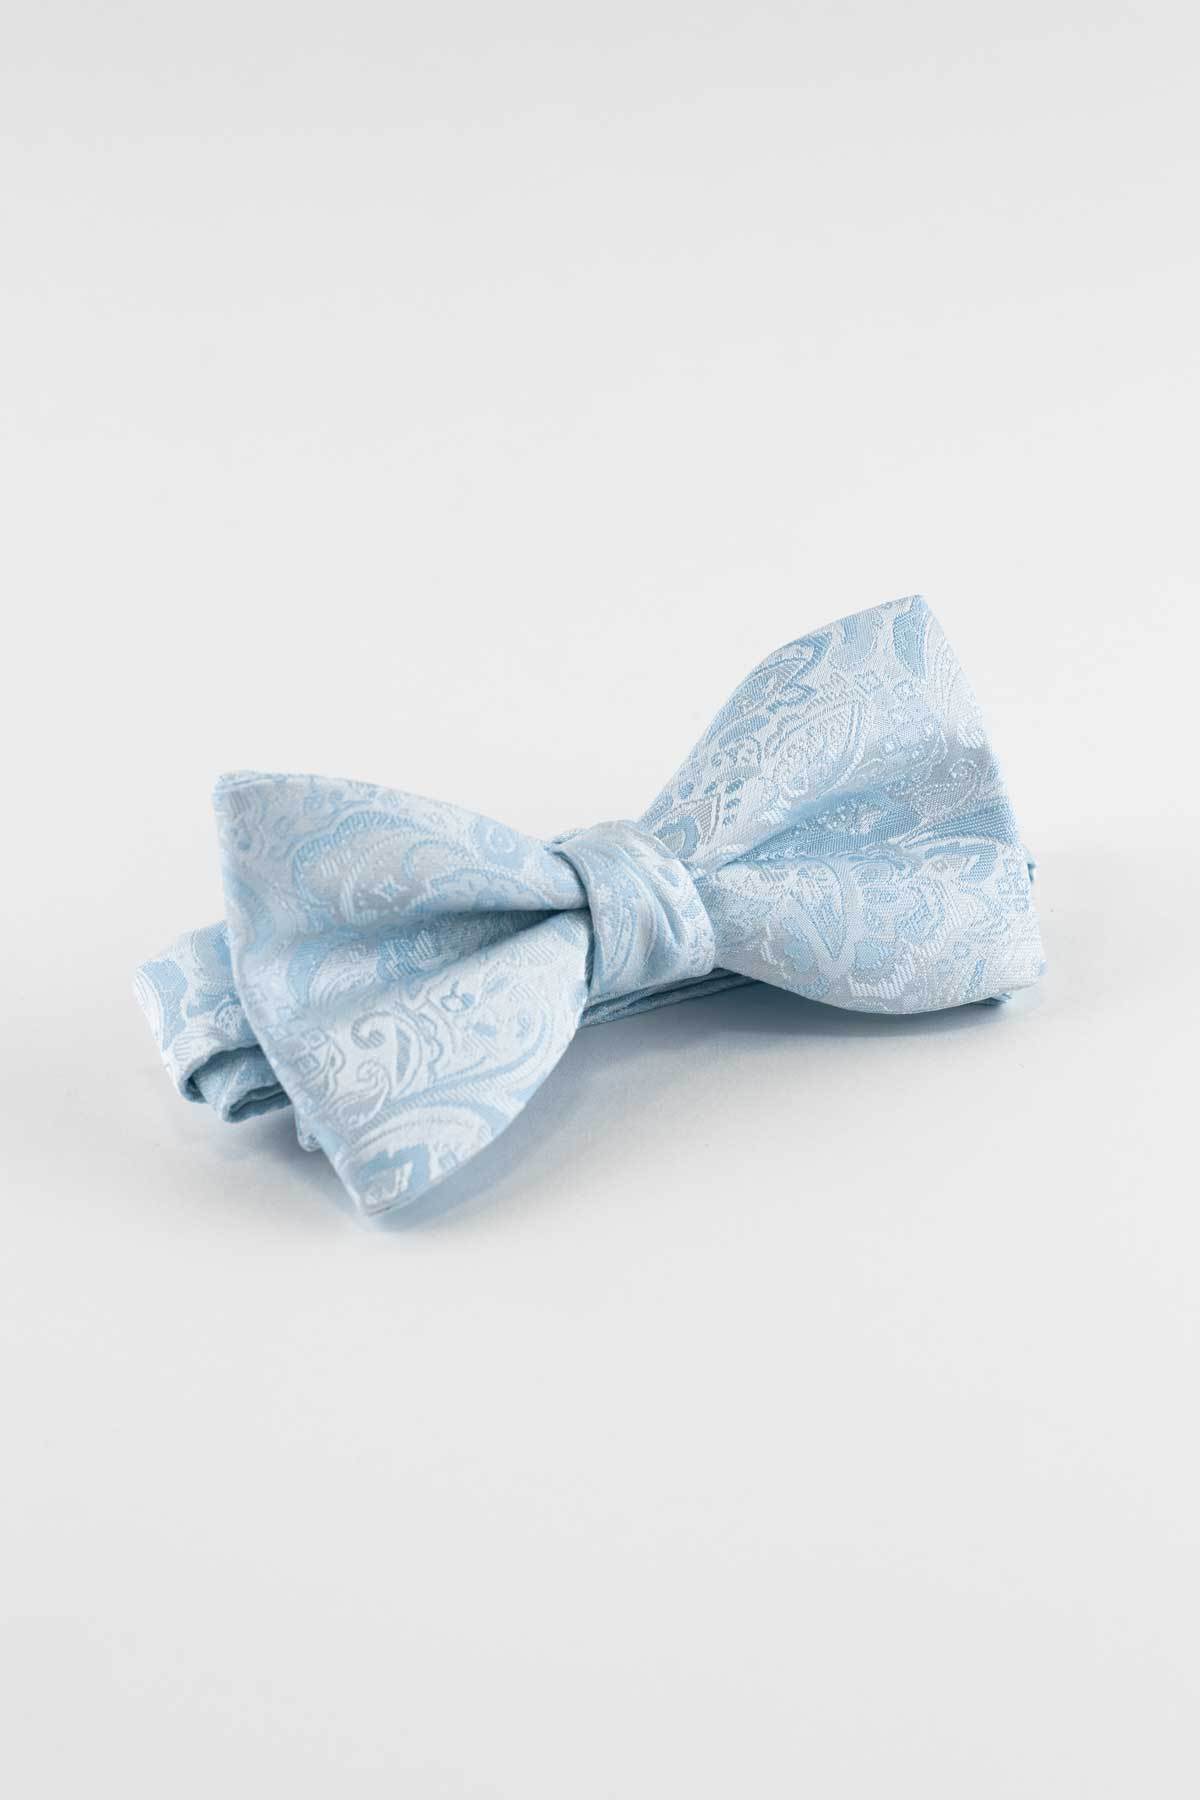 Sea Glass|Paisley Bow Tie | Kennedy Blue